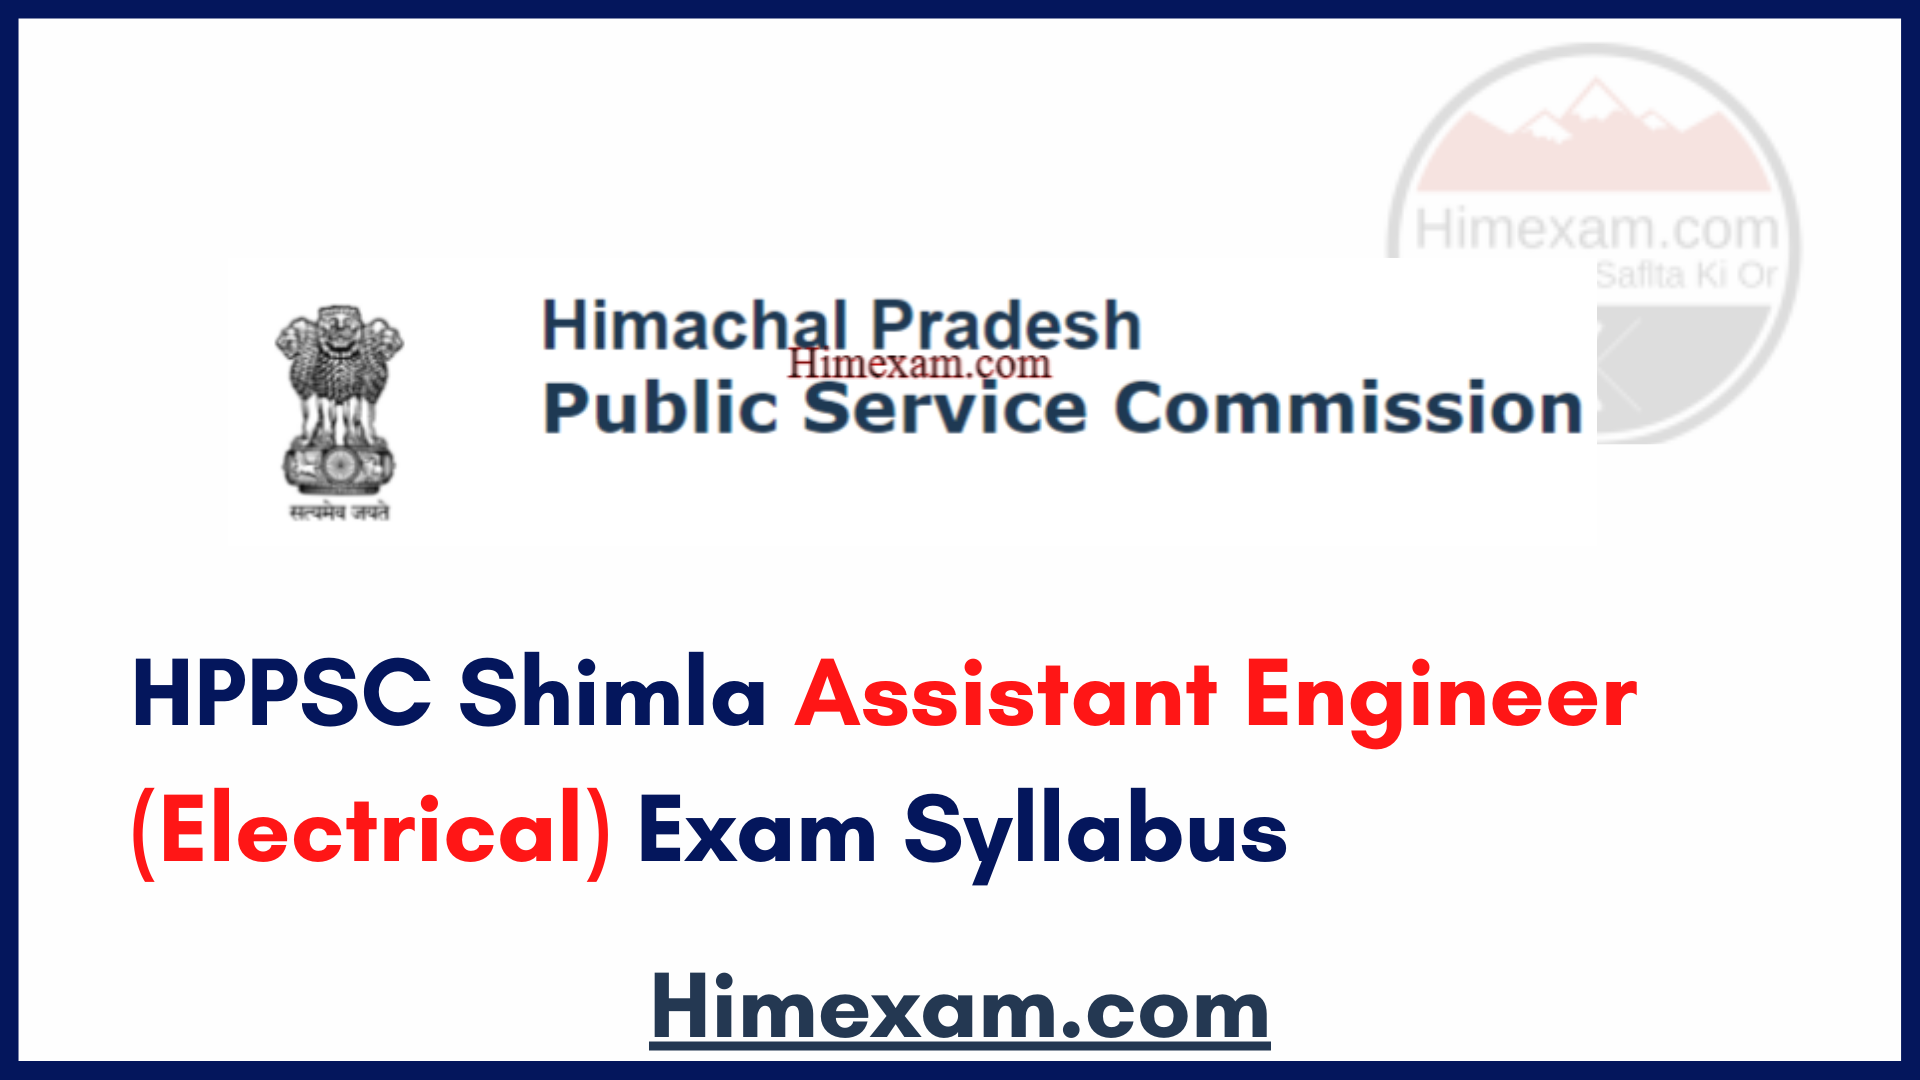 HPPSC Shimla Assistant Engineer (Electrical) Exam Syllabus